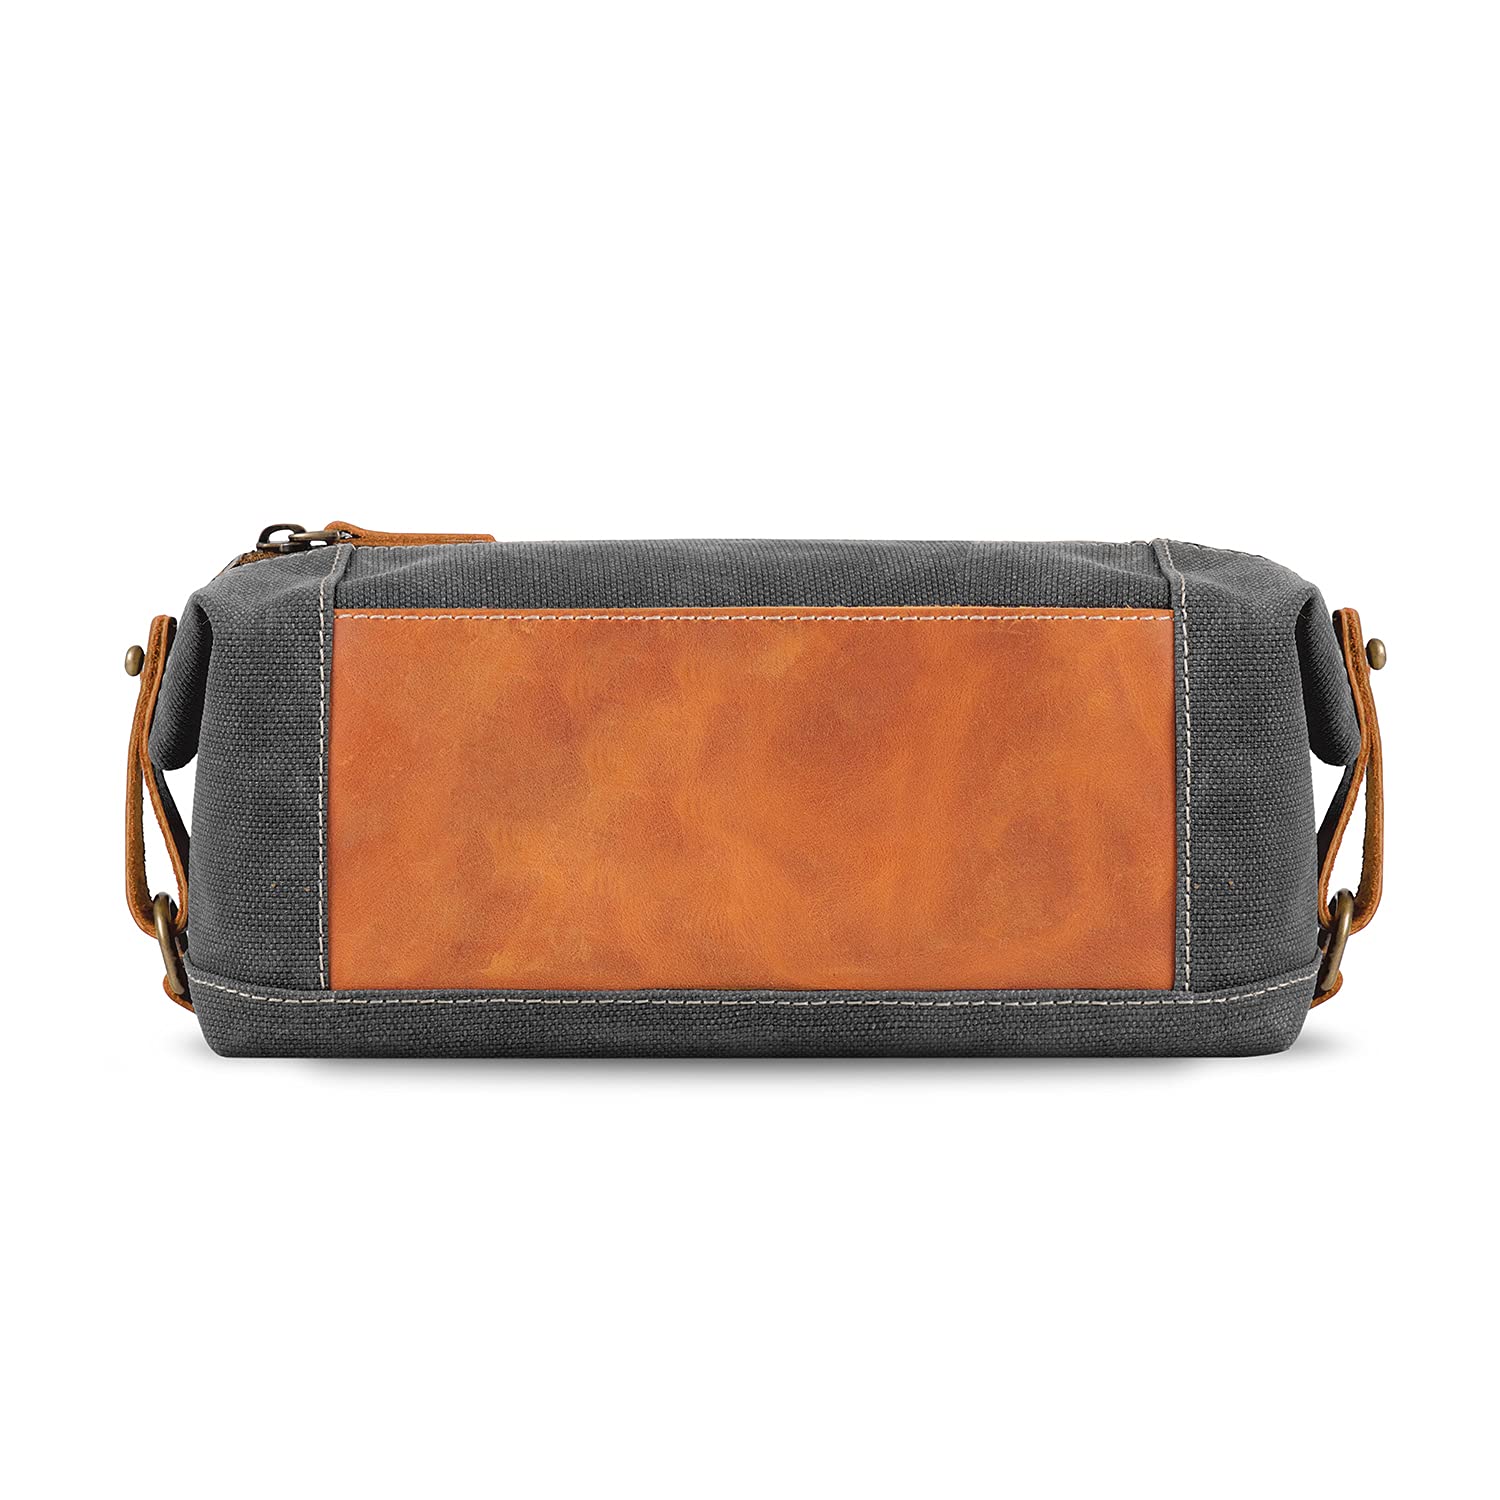 Londo Toiletry Bag Genuine Leather and Canvas Travel Toiletry Bag Dopp Kit - Unisex - Dark Brown